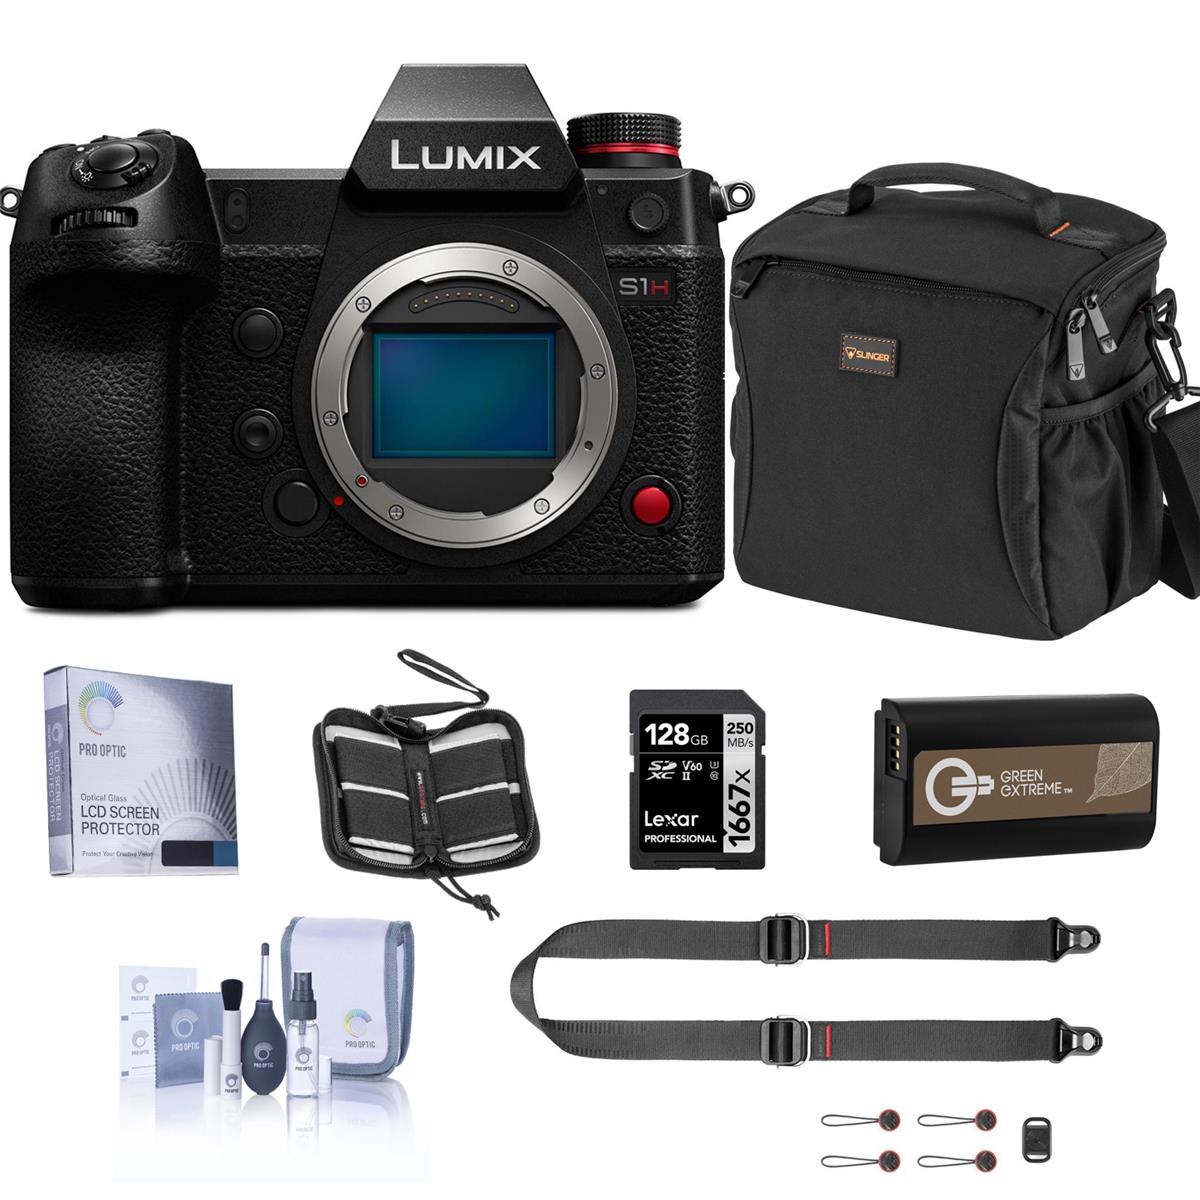 Panasonic Lumix DC-S1H Mirrorless Digital Camera Body with Accessories Kit